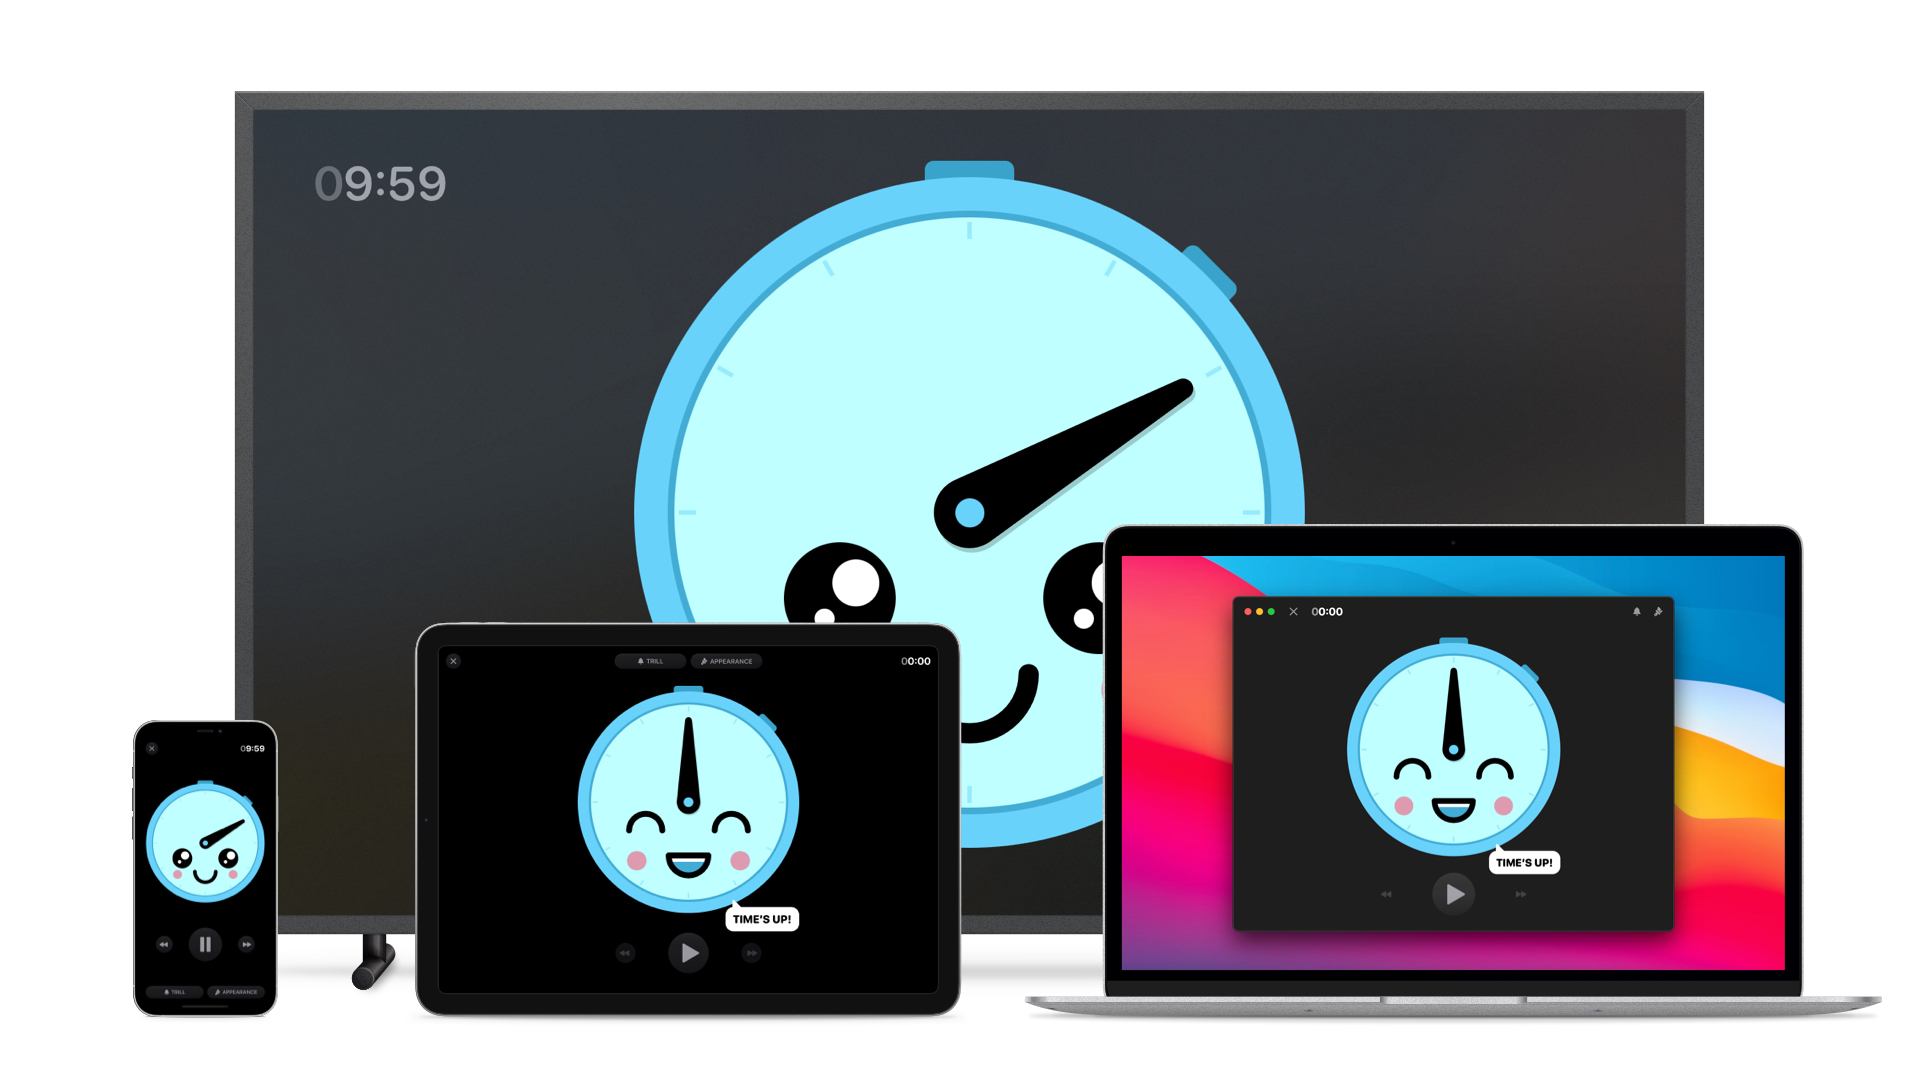 det er alt forarbejdning Land med statsborgerskab MacやiPhone/iPadだけでなくApple TVにも対応したタイマーアプリ「Time's Up! Timer」がリリース。